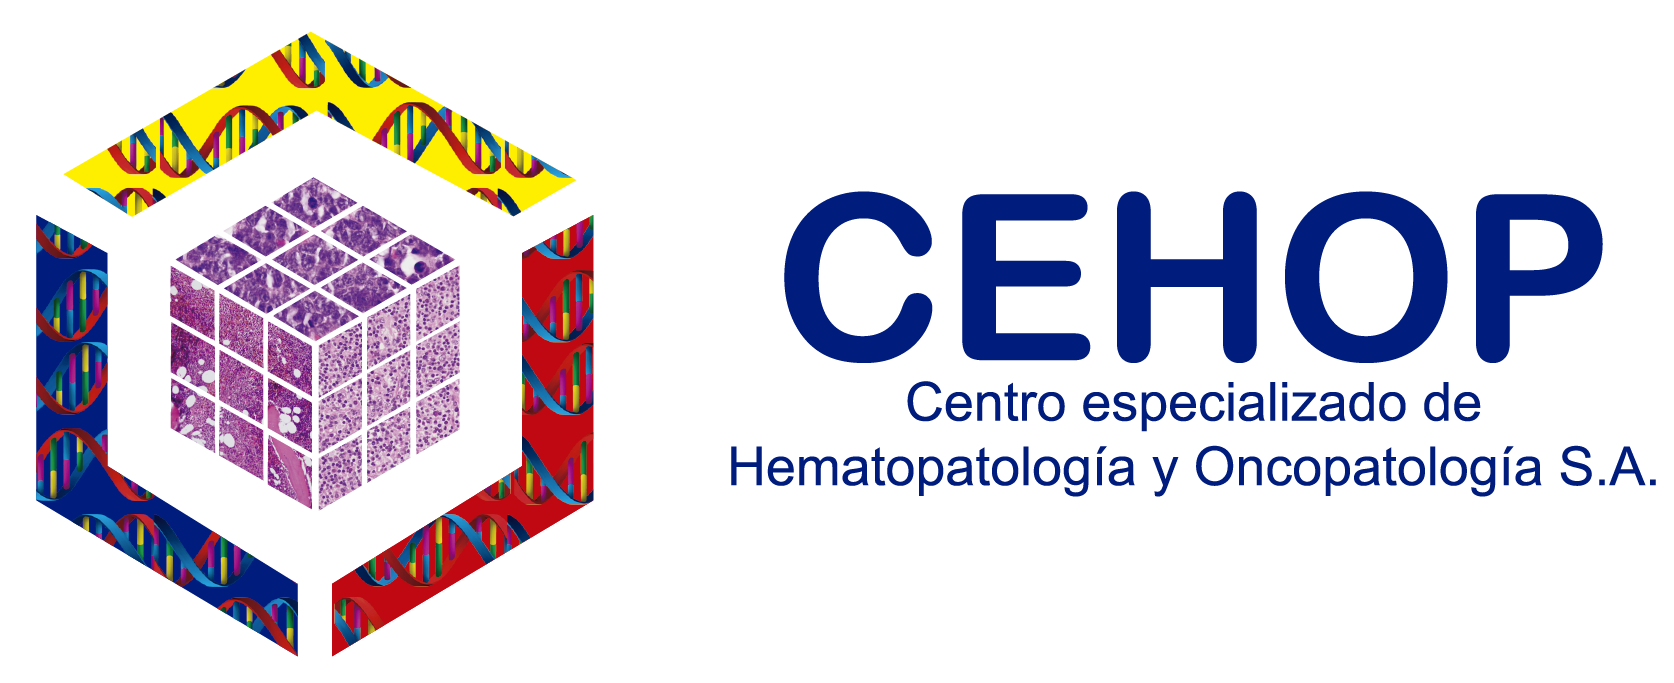 Centro Especializado de Hematopatologia y Oncopatologia